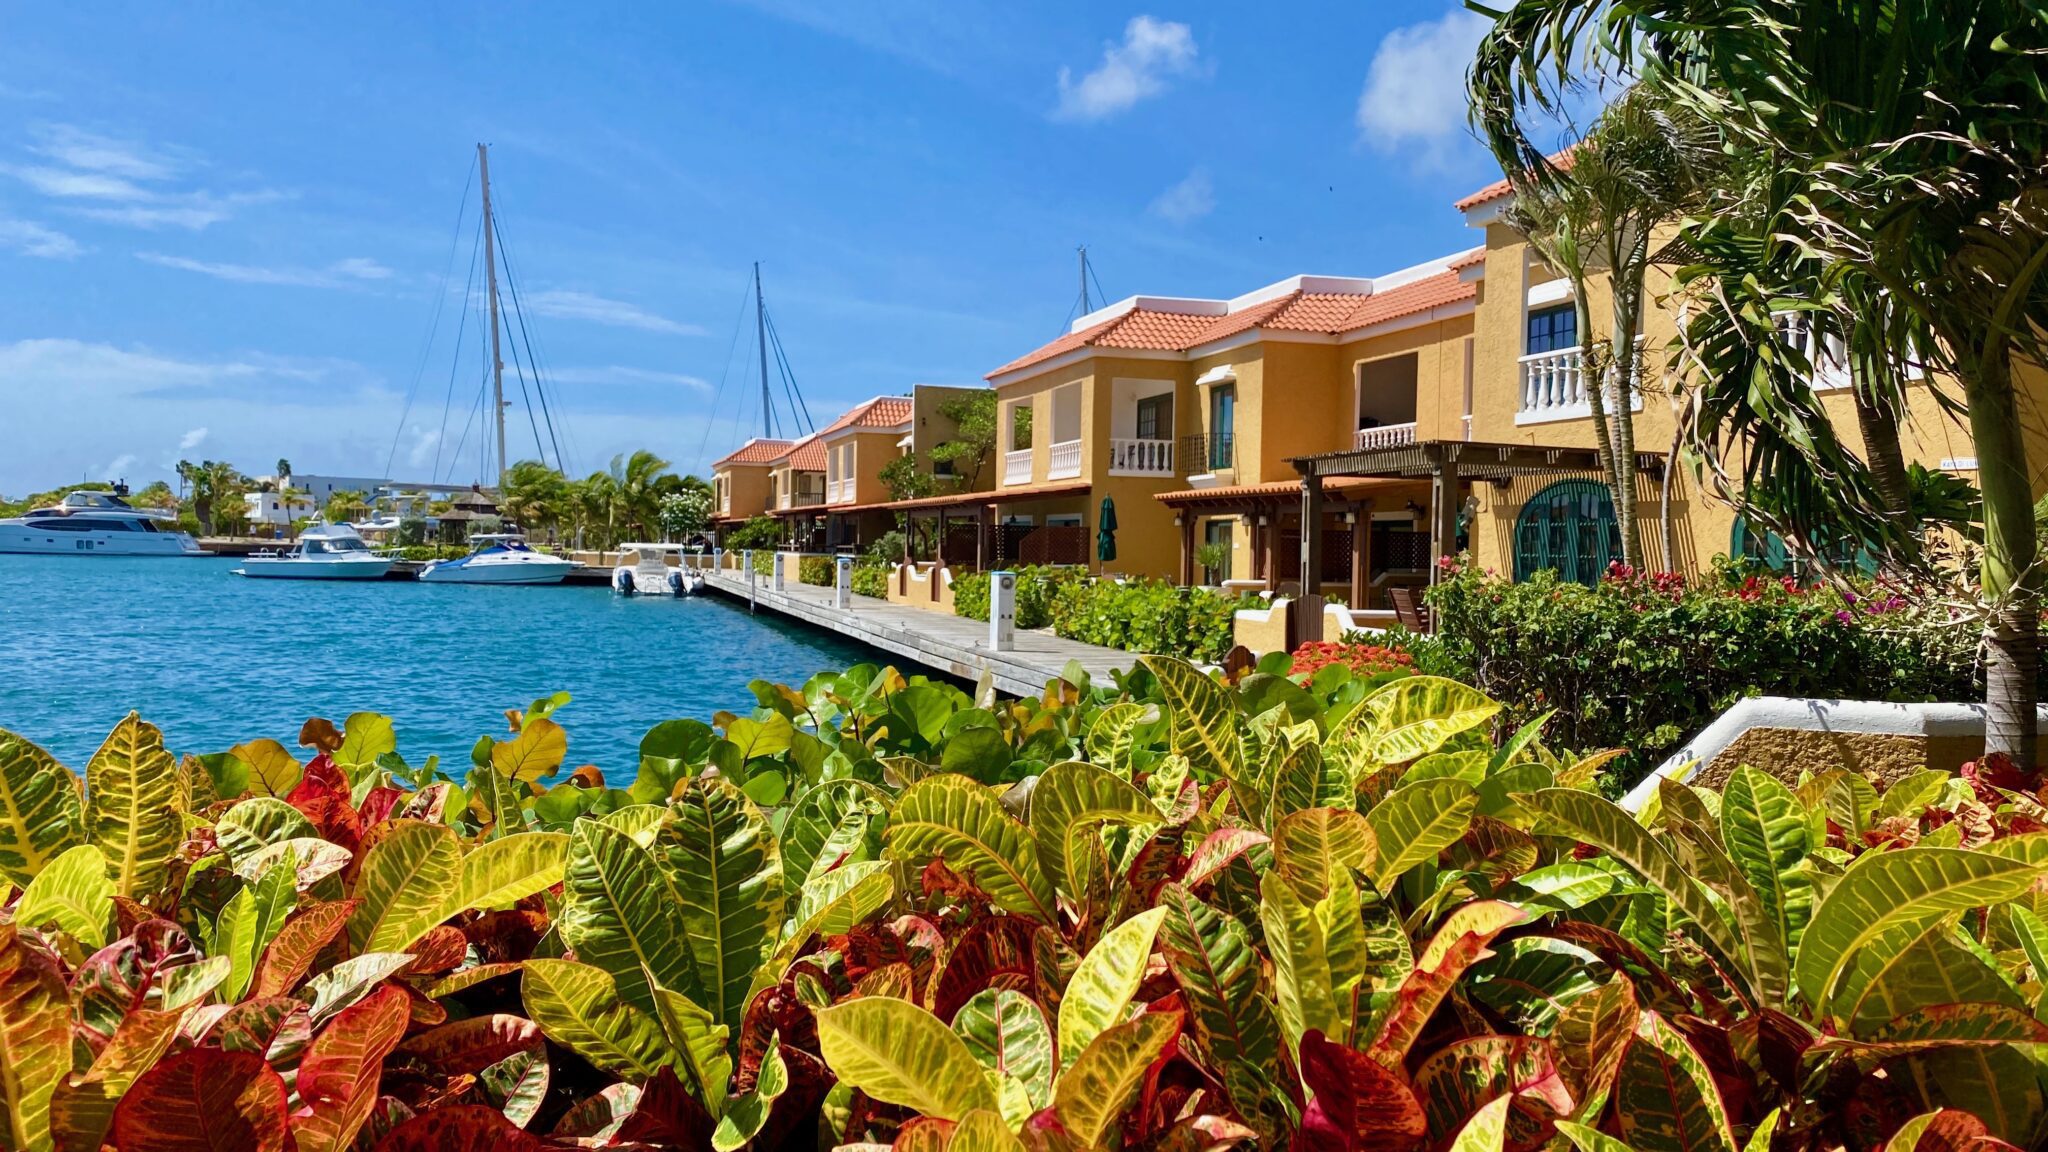 Villas at Harbour Village Family Resort in Bonaire